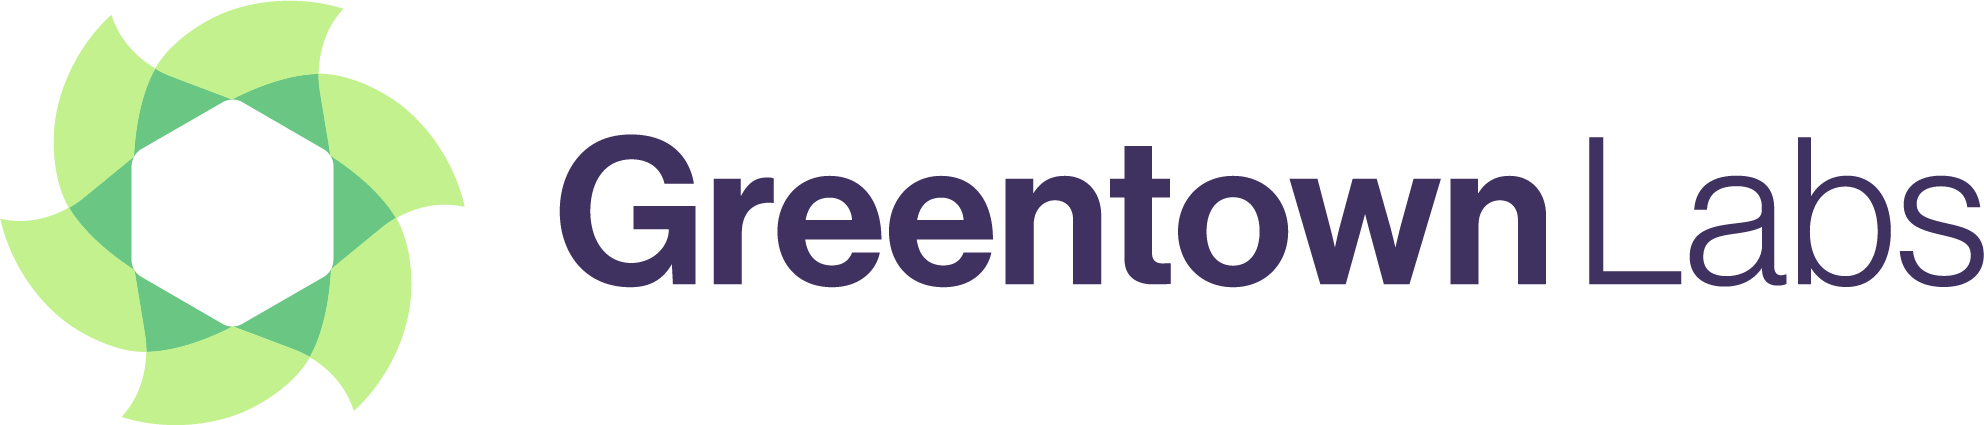 Greentwonlabs logo